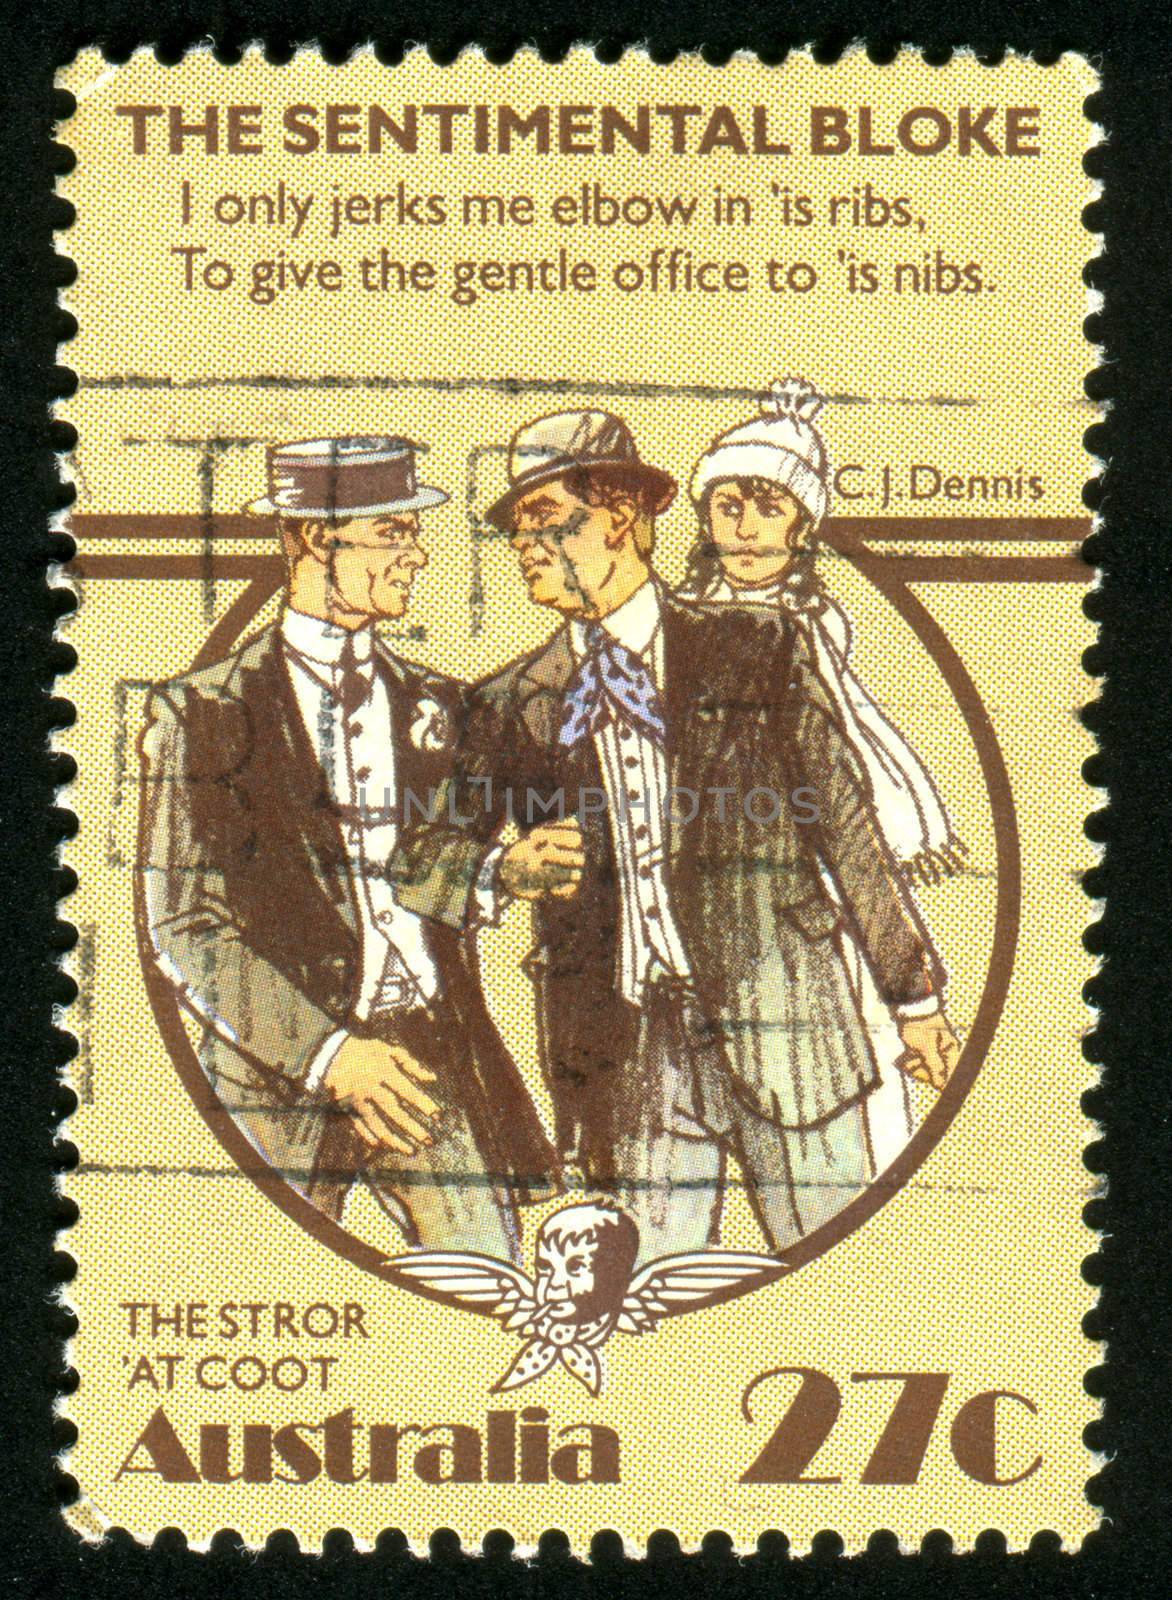 AUSTRALIA - CIRCA 1983: stamp printed by Australia, shows conversation between two men, circa 1983